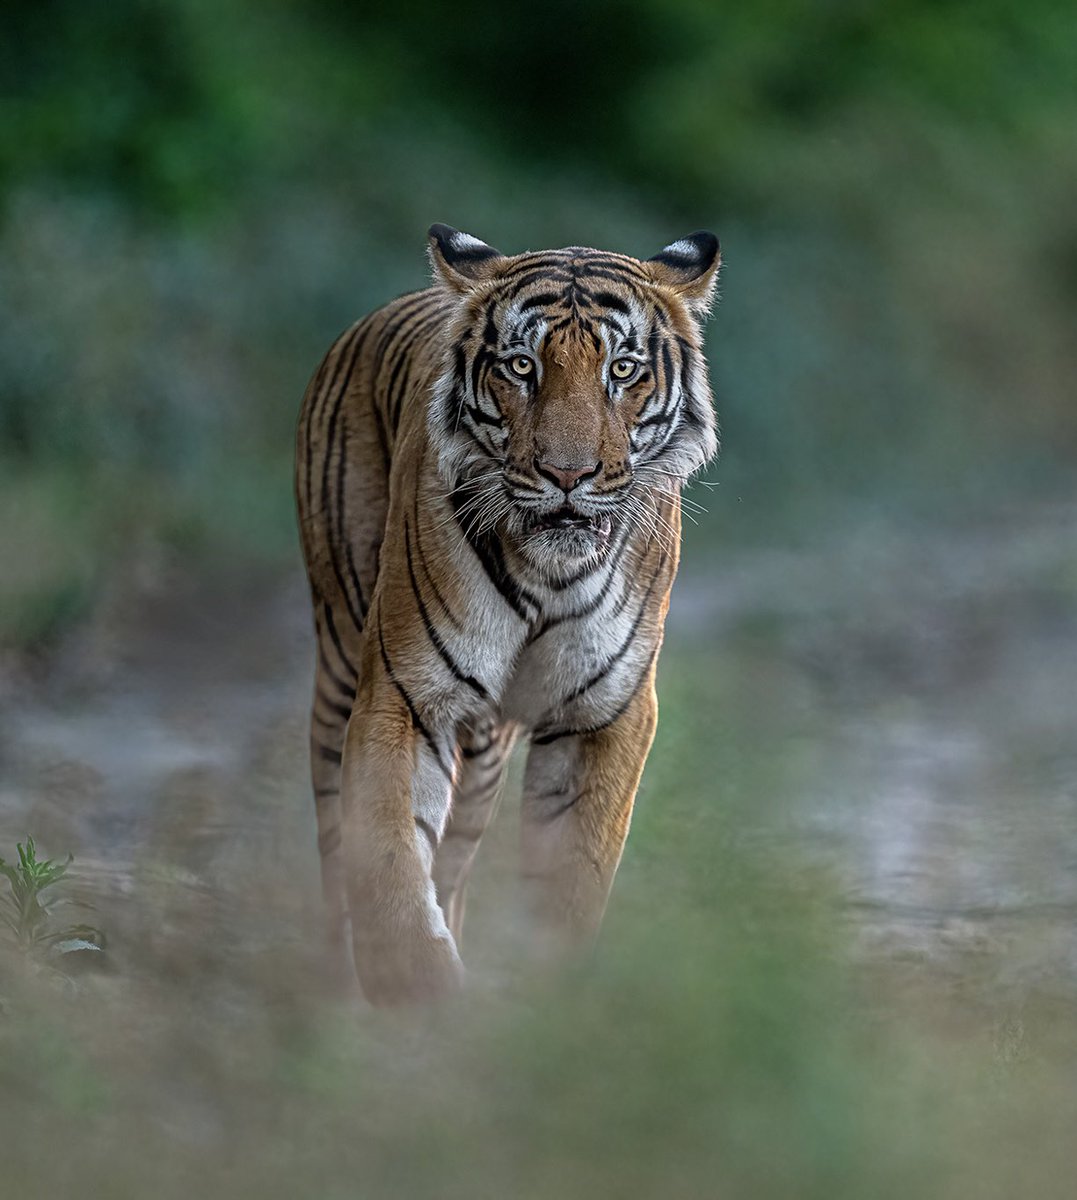 Tiger, Corbett Tiger Reserve @NikonIndia #nature #wildlife #natgeoindia